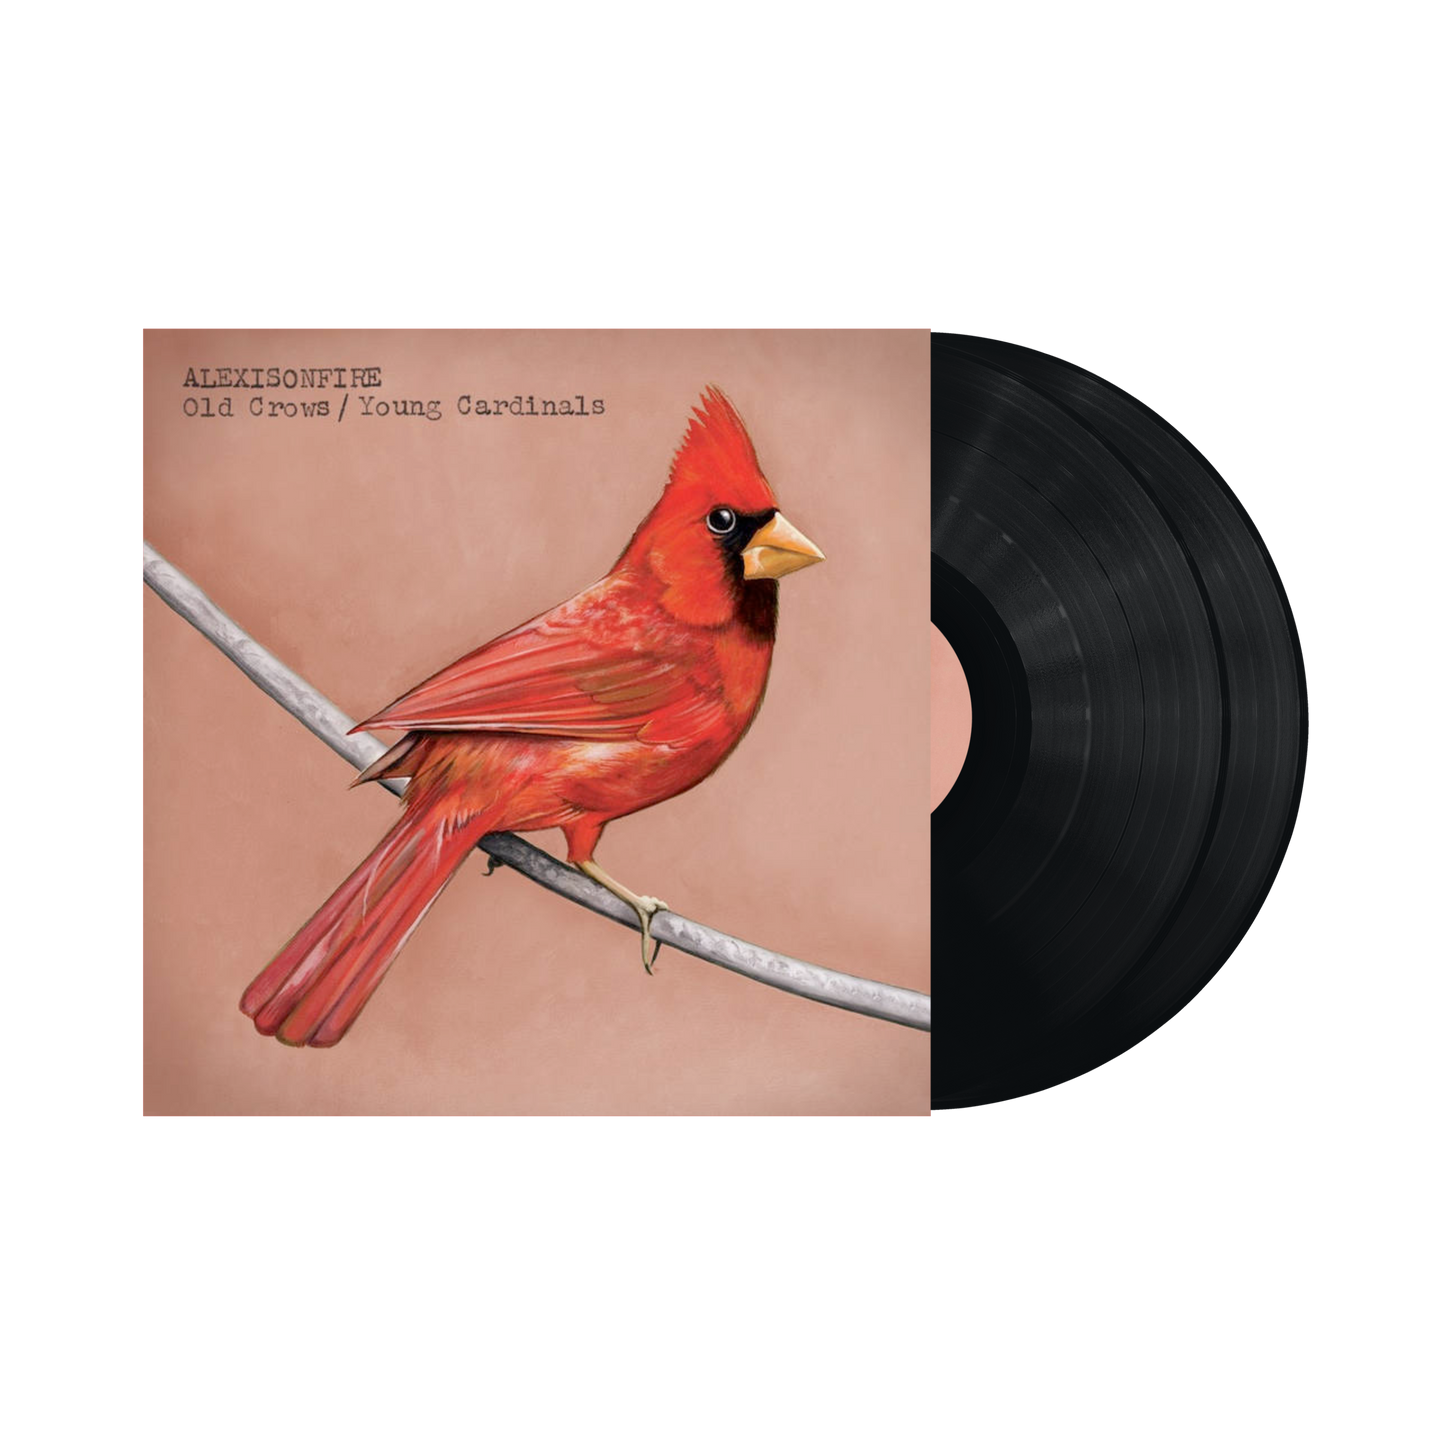 Alexisonfire "Old Crows / Young Cardinals" 2xLP